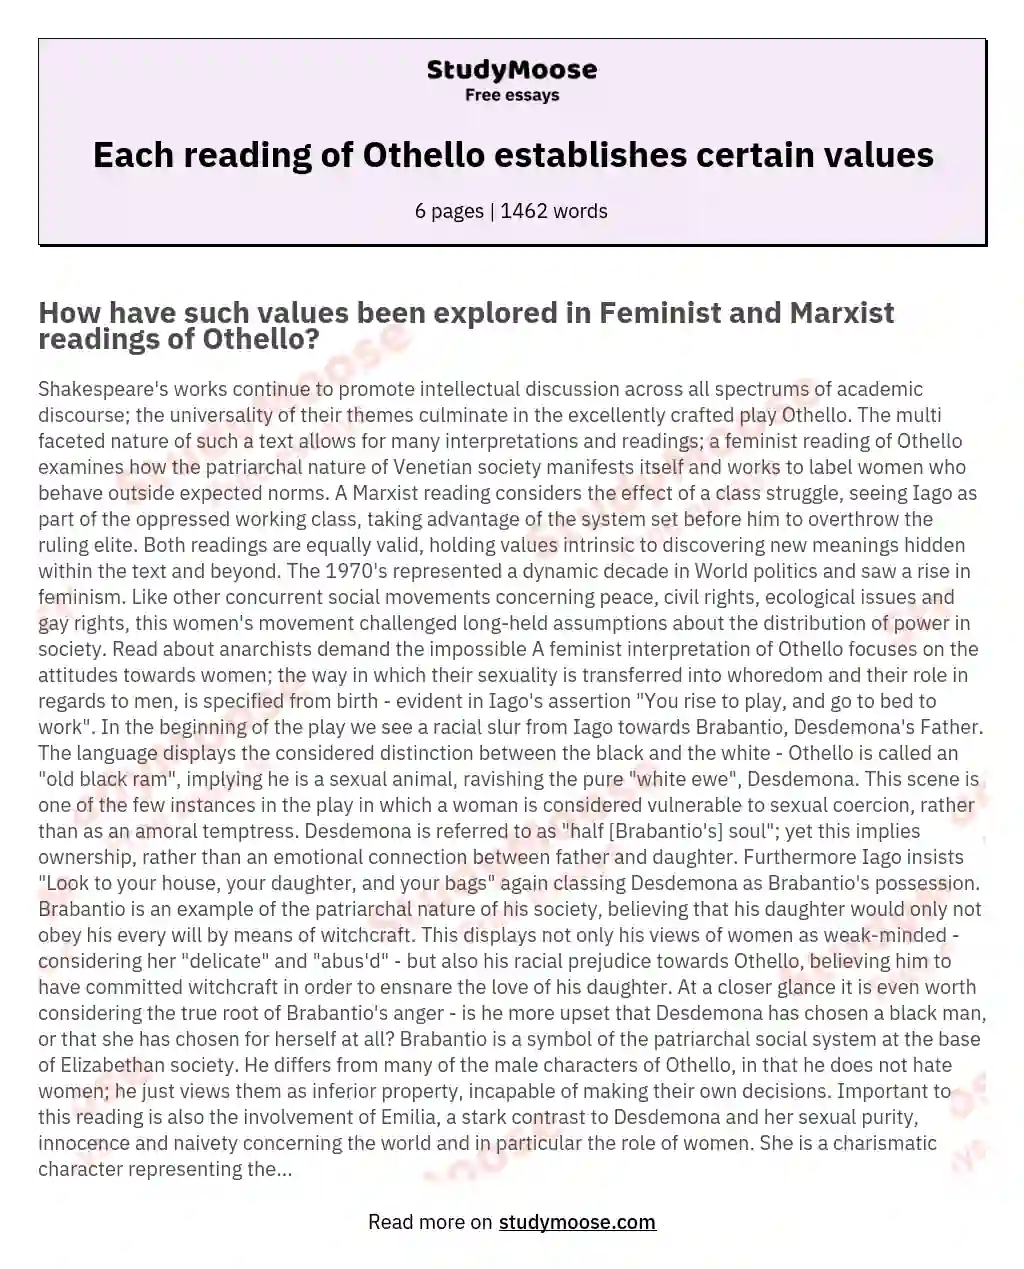 Each reading of Othello establishes certain values essay